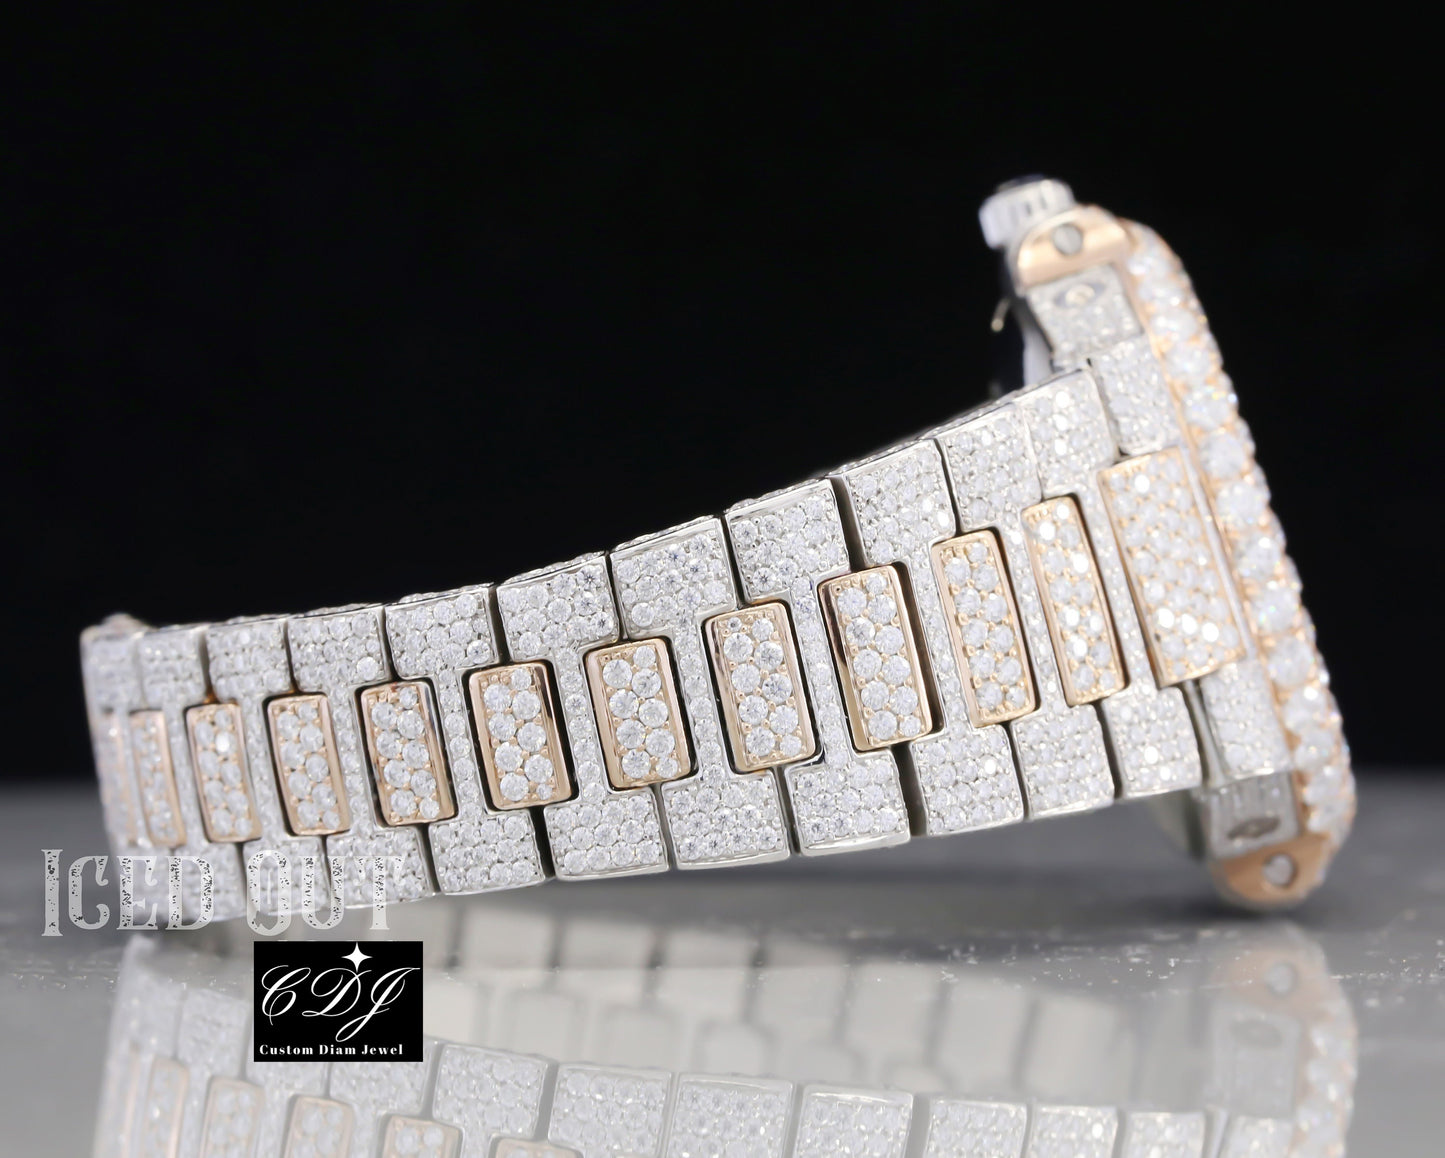 Two Tone Ice Out Luxury Diamond Watch (27.5 CT Approx)  customdiamjewel   